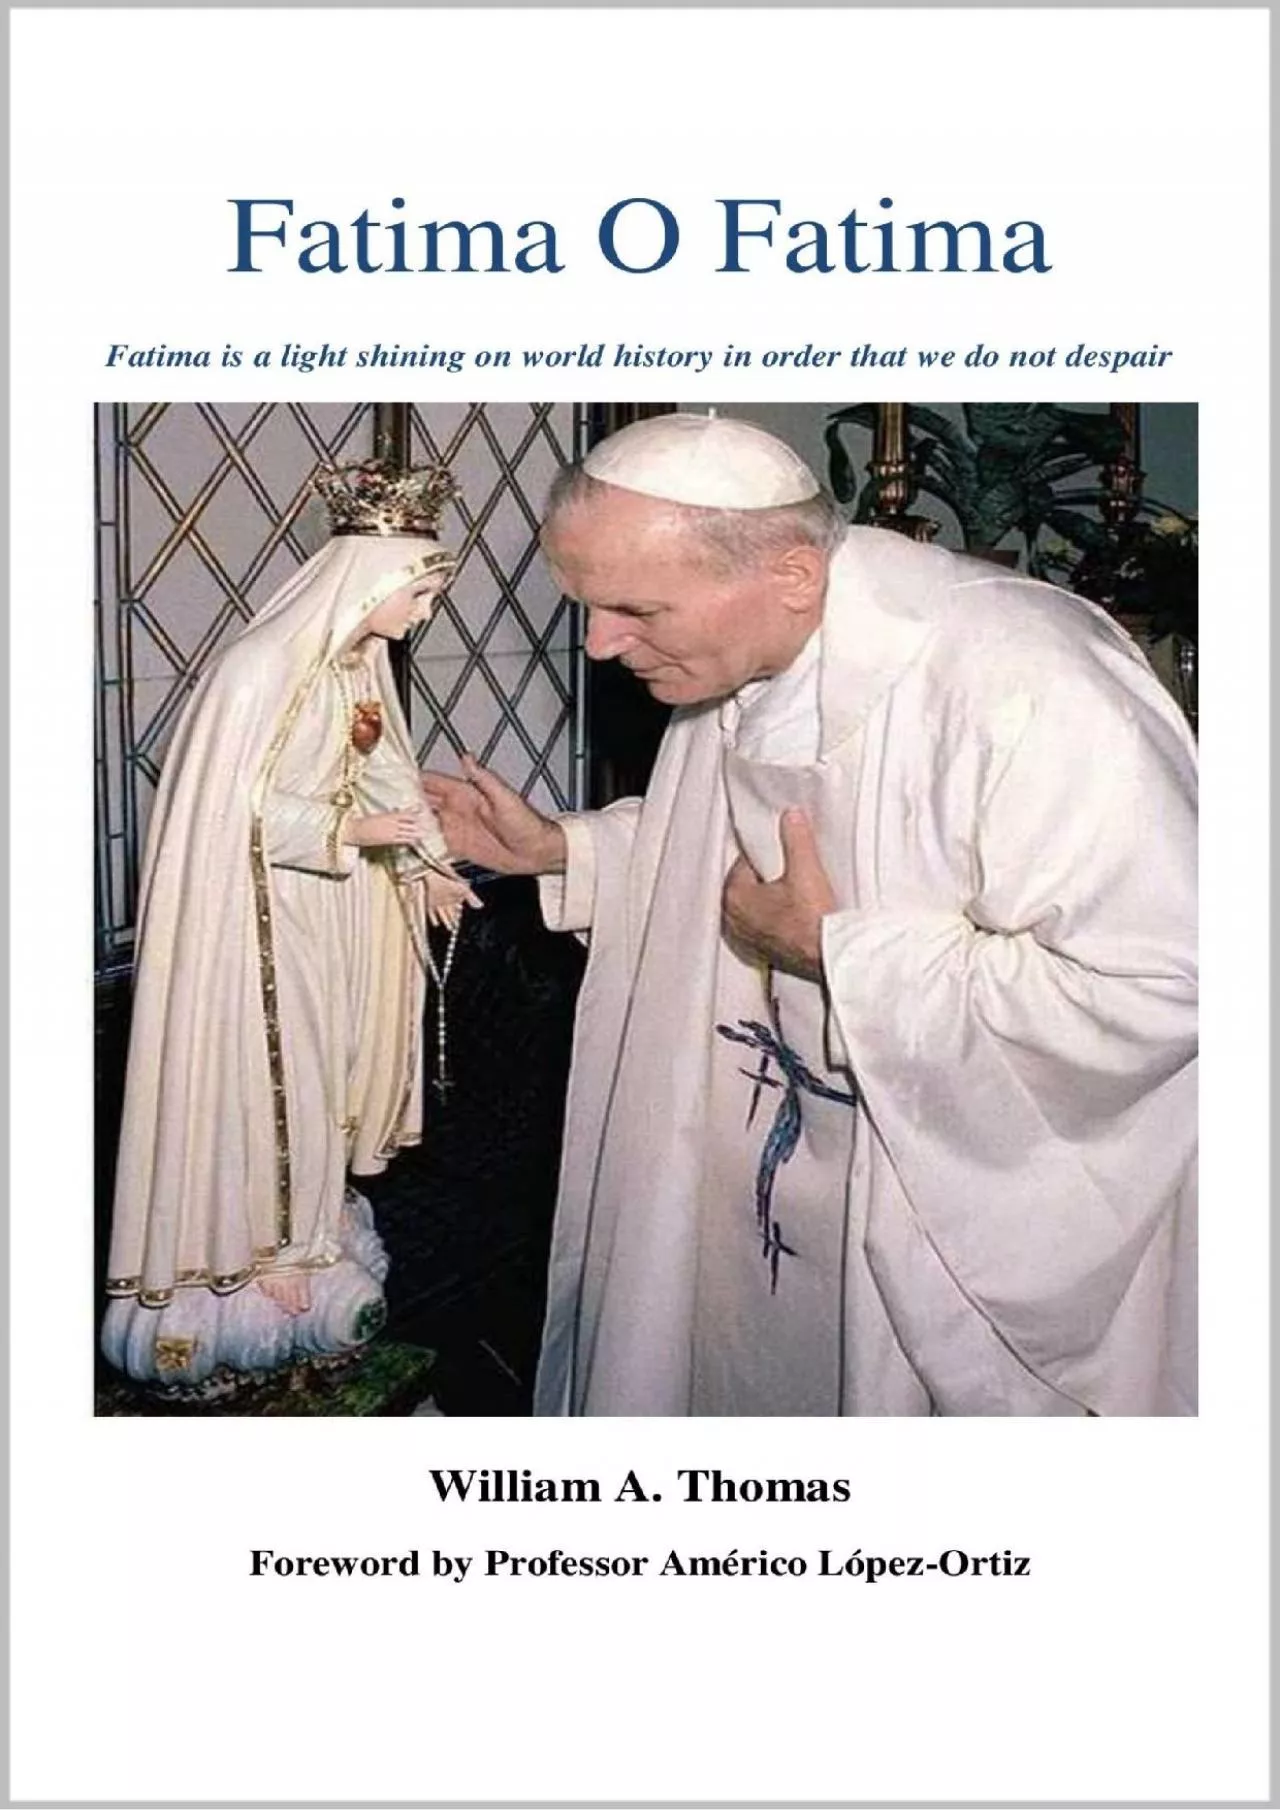 [EBOOK] Fatima O Fatima Roman Catholic Orthodox Theology and Spirituality and traditional